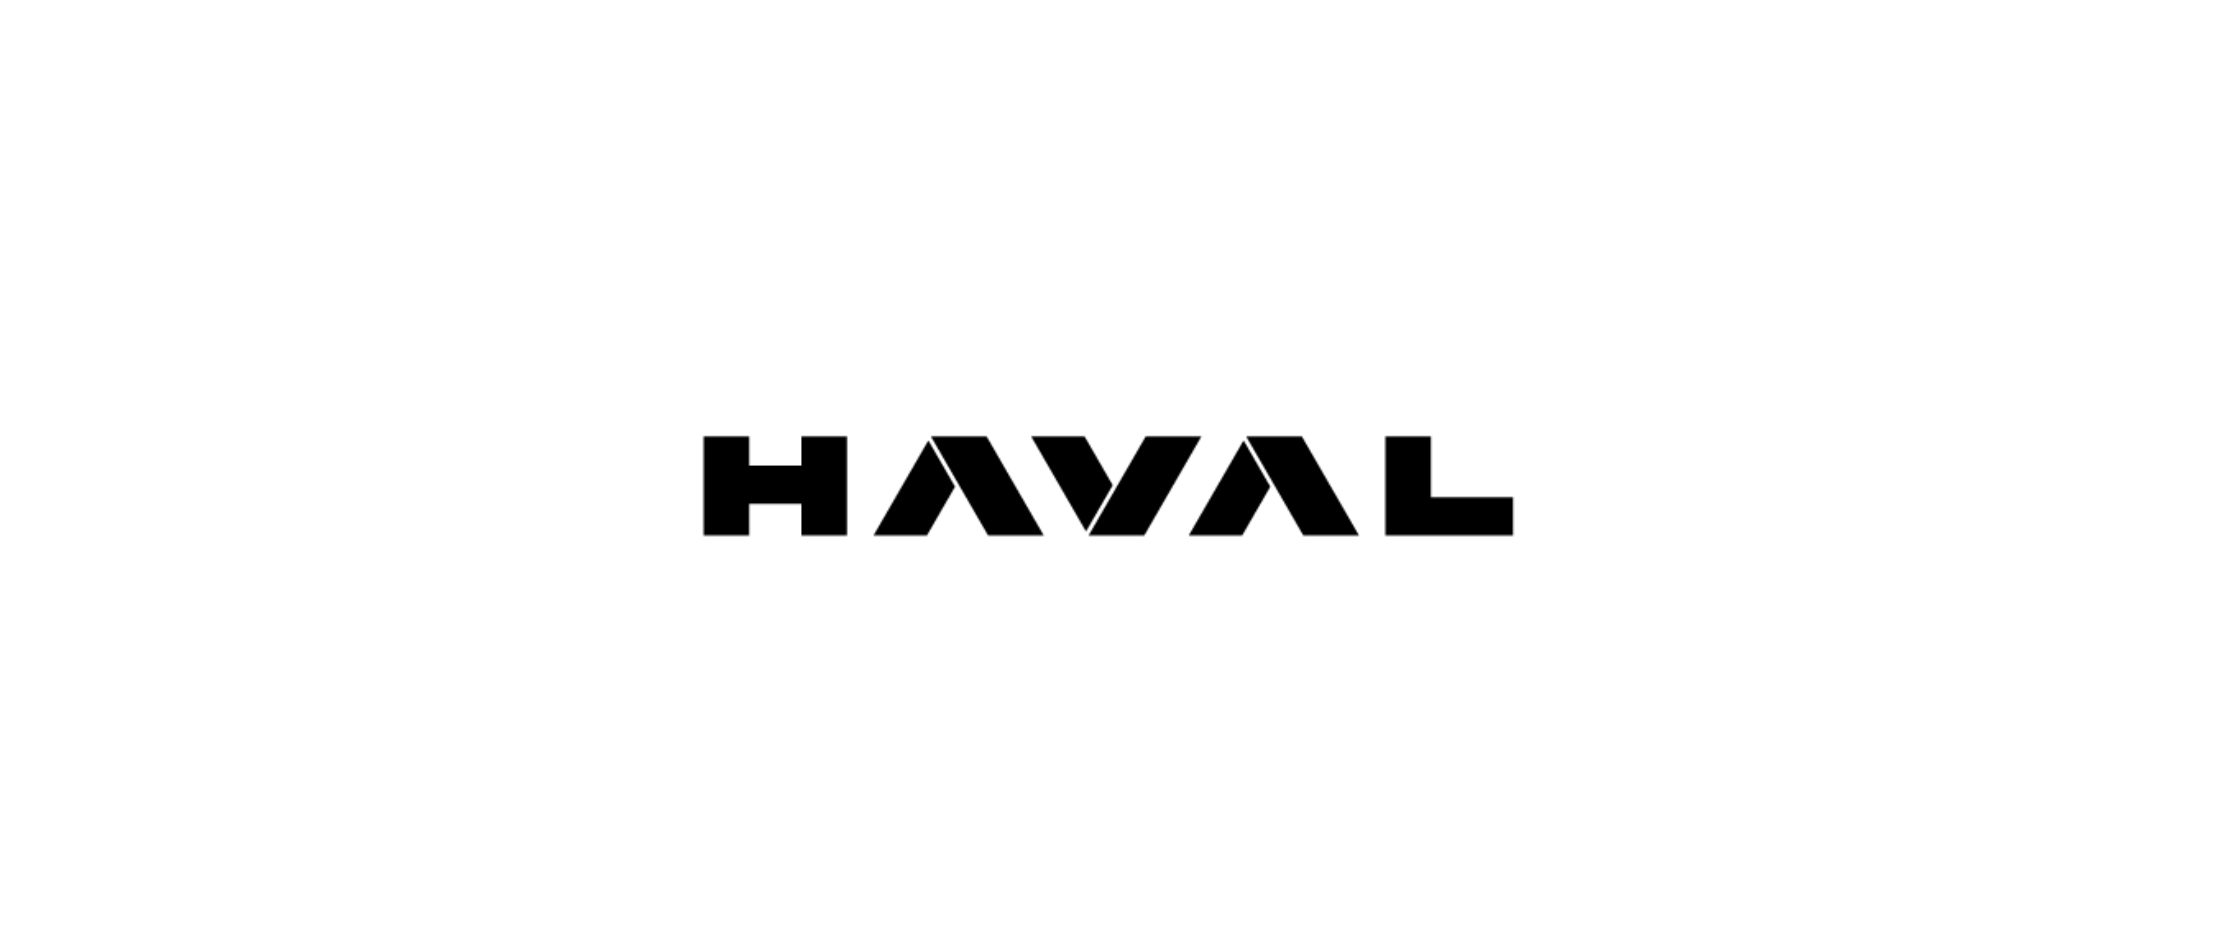 Представлен новый логотип бренда HAVAL